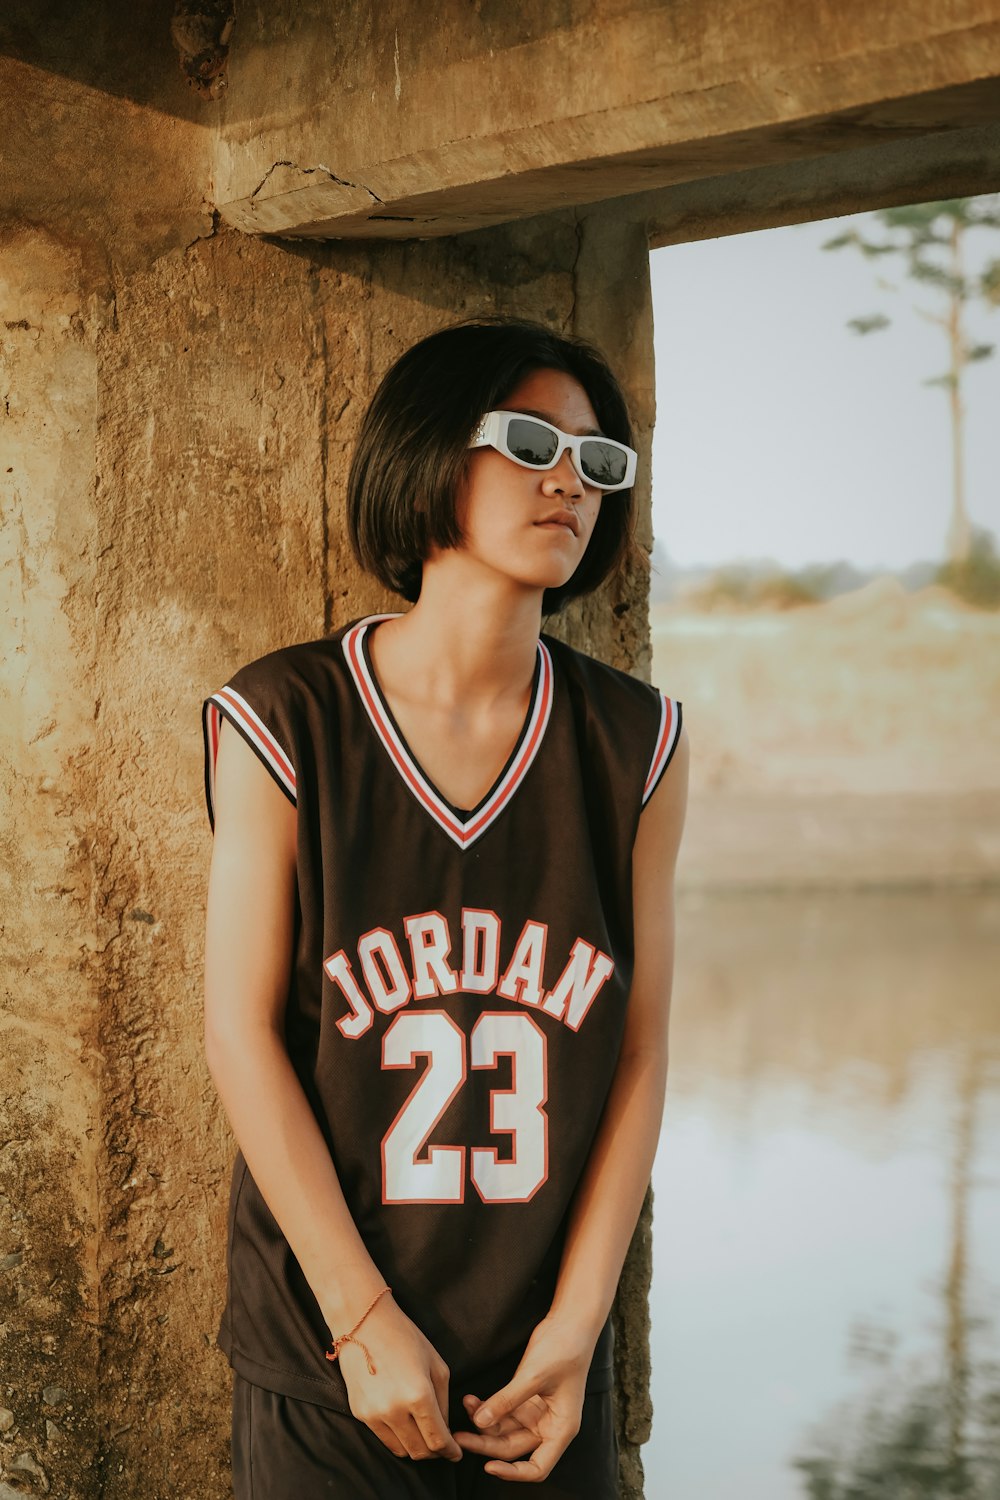 a woman wearing a basketball uniform and sunglasses